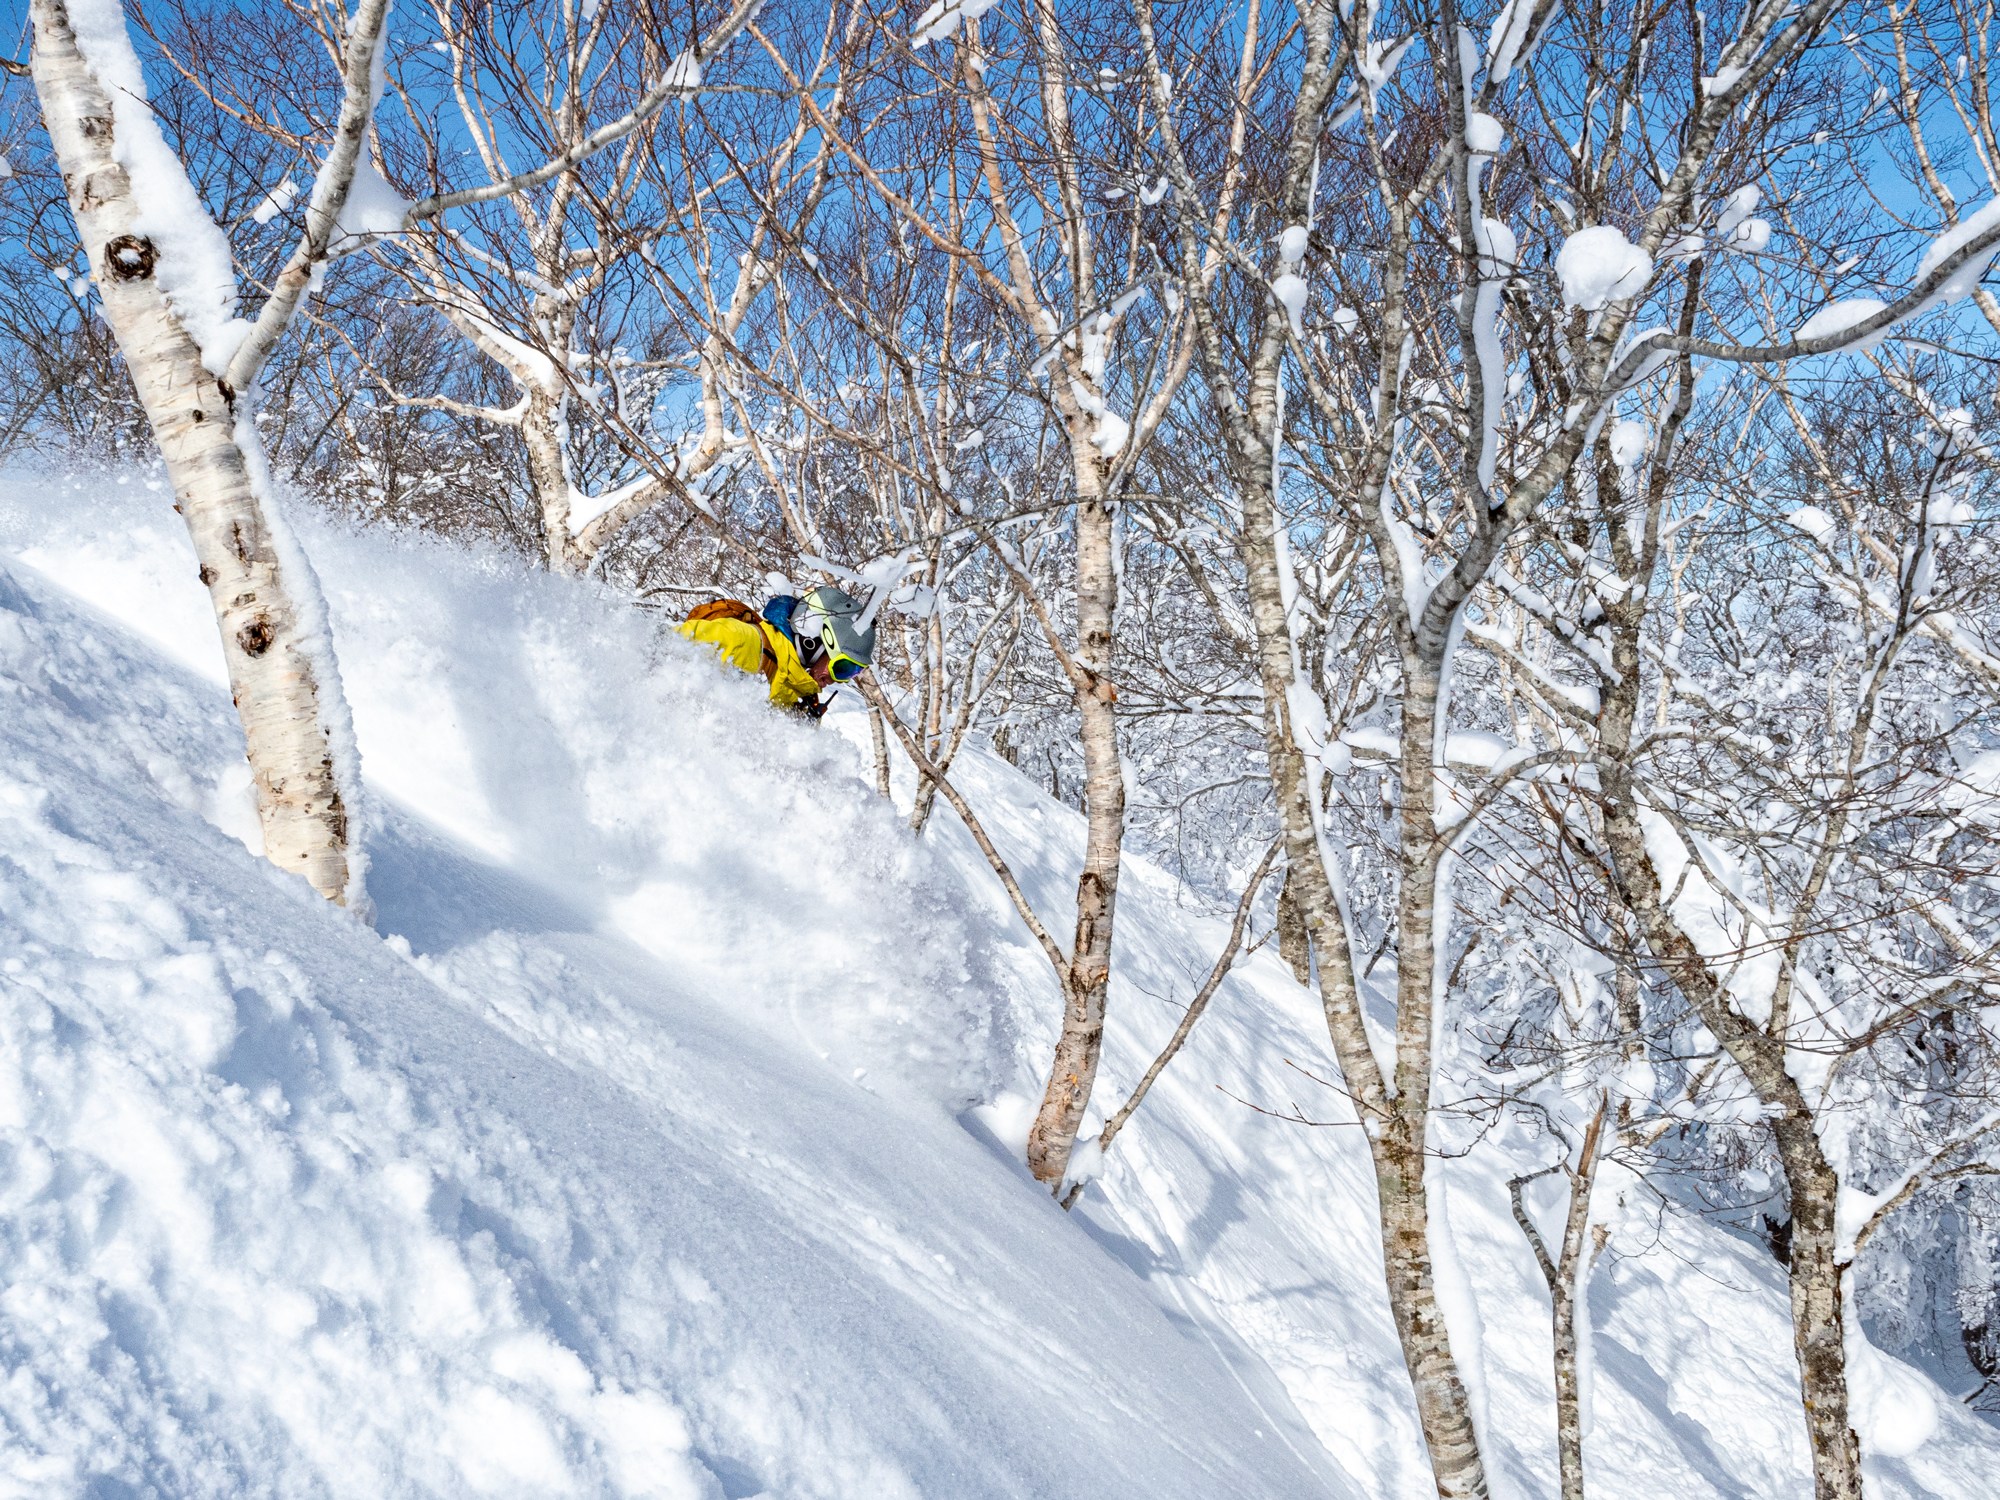 Snowboarder enjoying deep powder at Okunakayama Kogen Ski Resort trough Birch trees